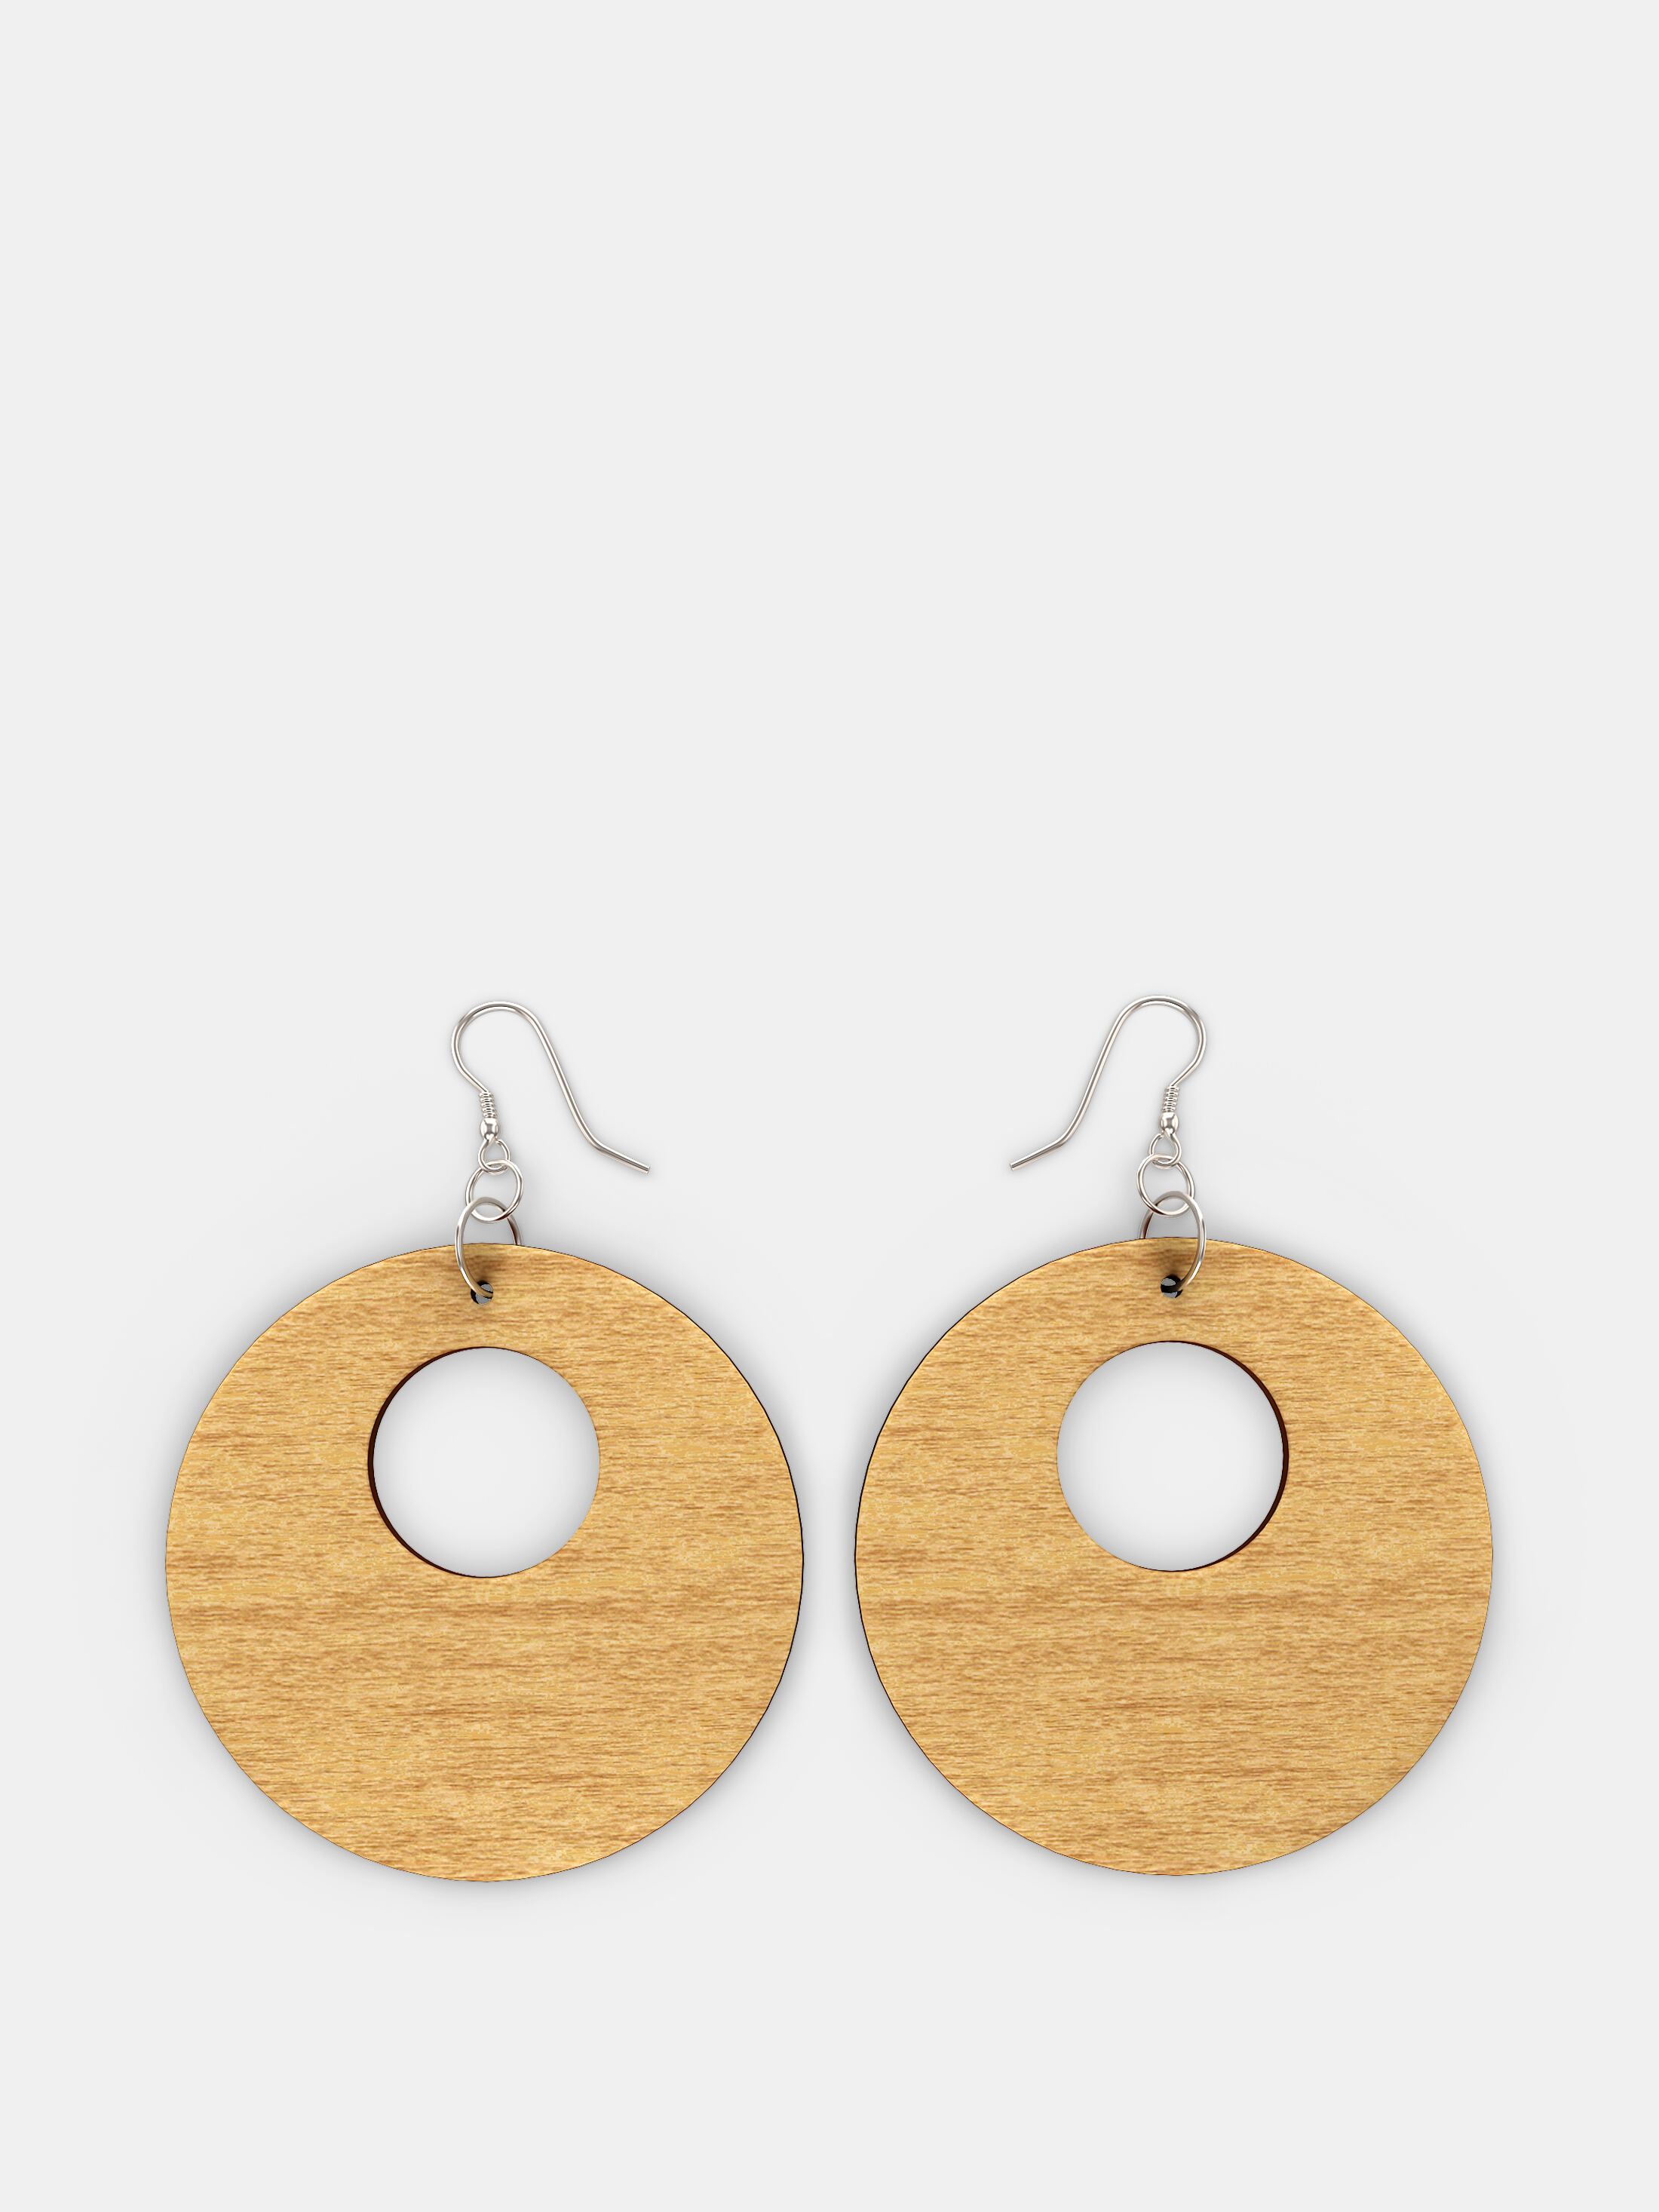 custom wooden earrings cut out circle shape